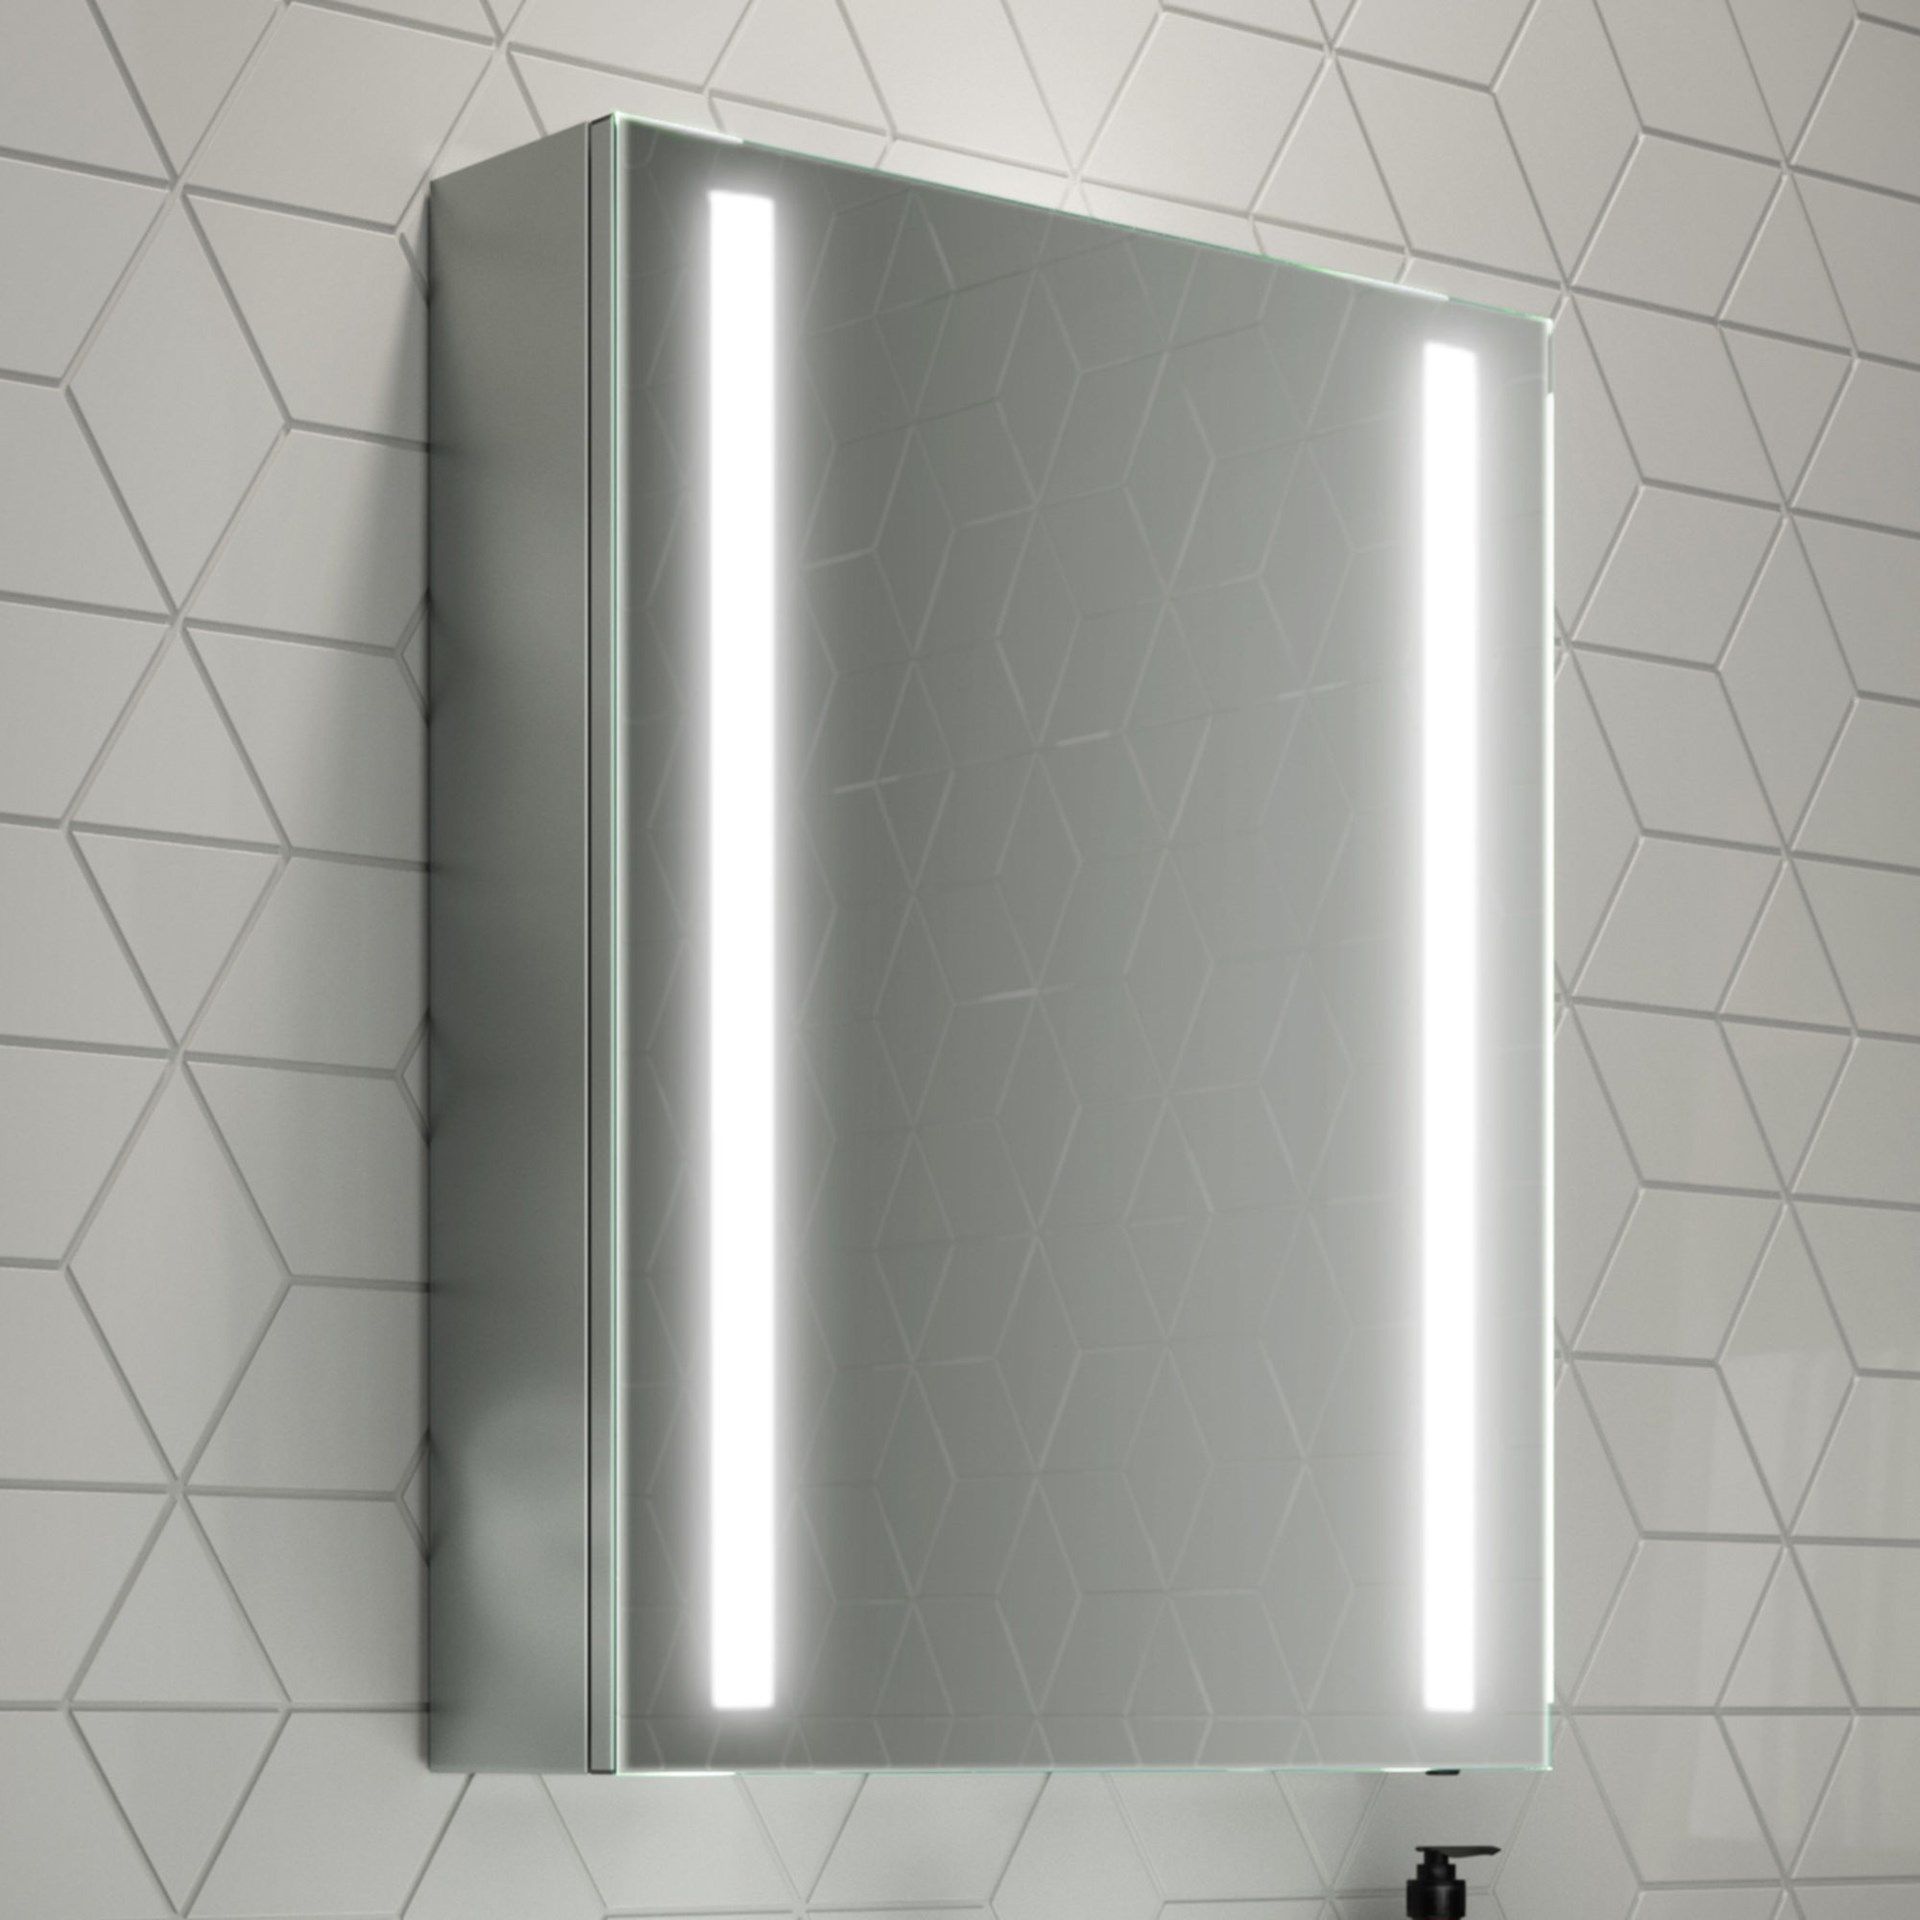 (RK2) 500x650mm Dawn Illuminated LED Mirror Cabinet. Energy efficient LED lighting, adding a c...